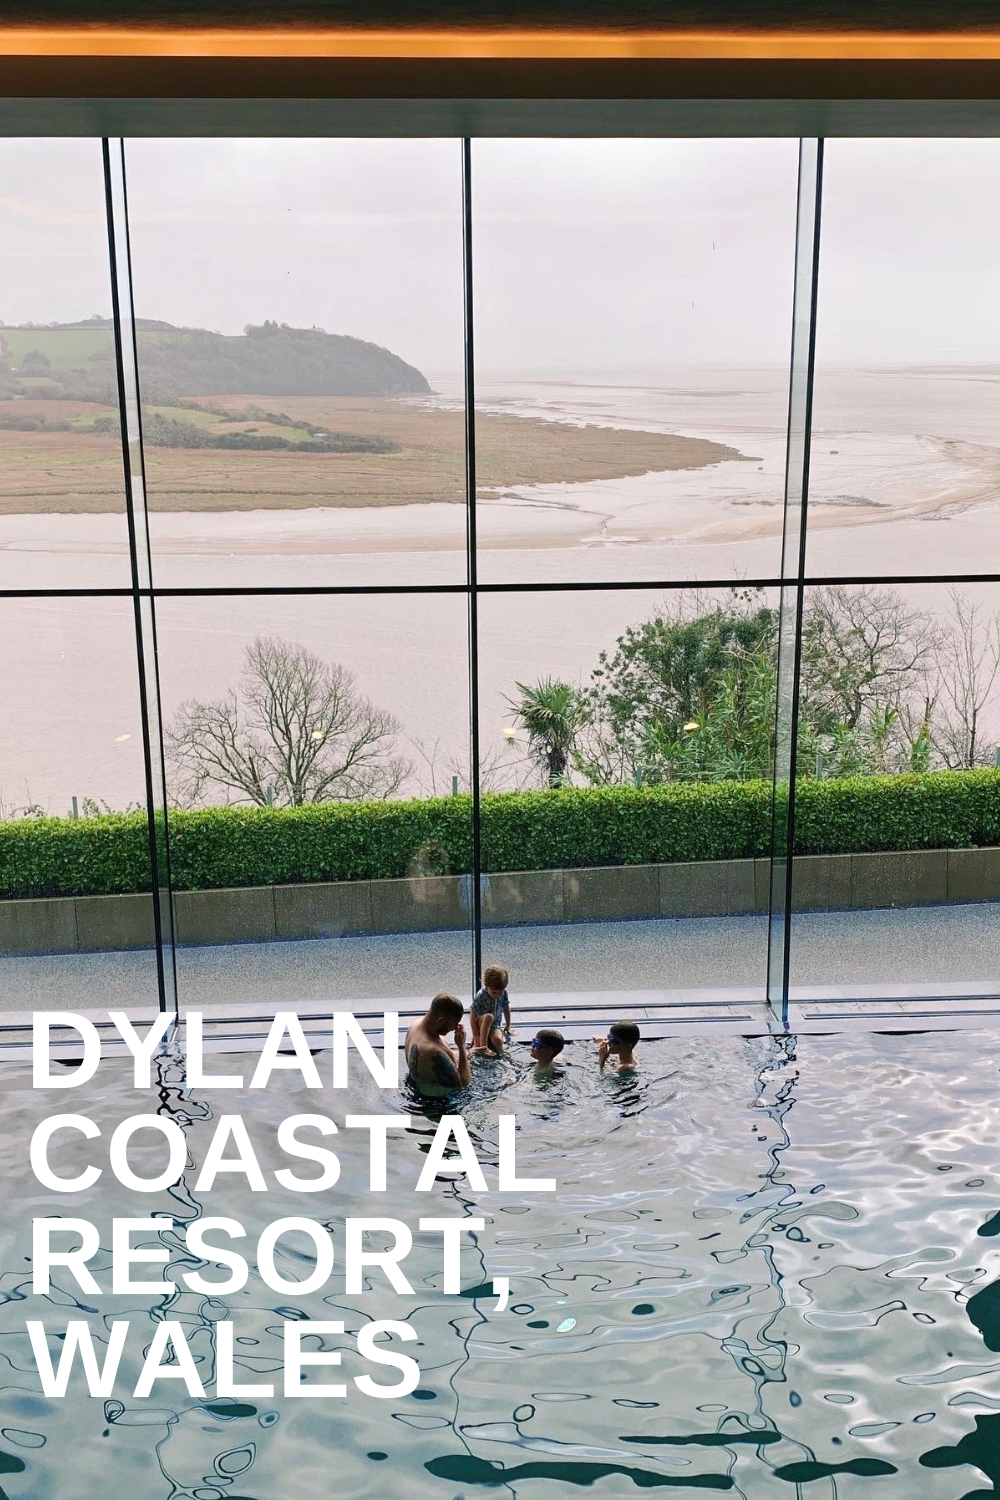 Dylan Coastal Resort Review